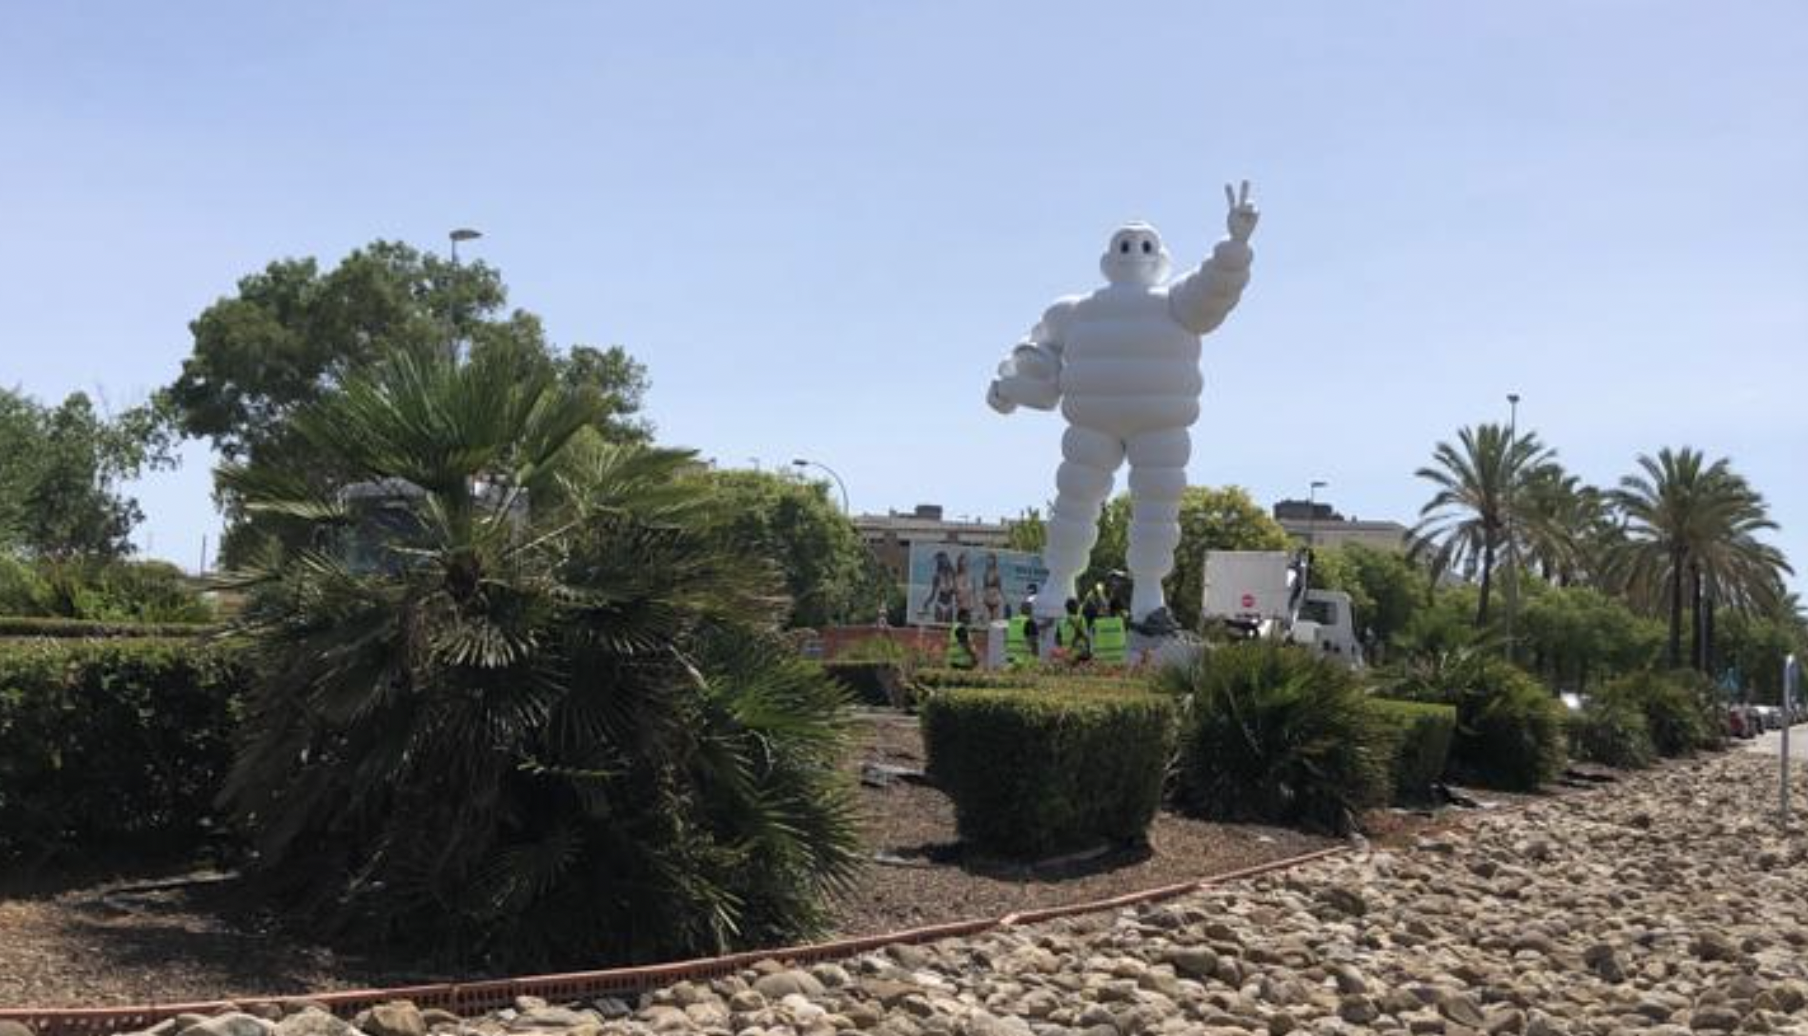 El muñeco de Michelin, en la rotonda al final de la avenida de la Granja de Jerez.